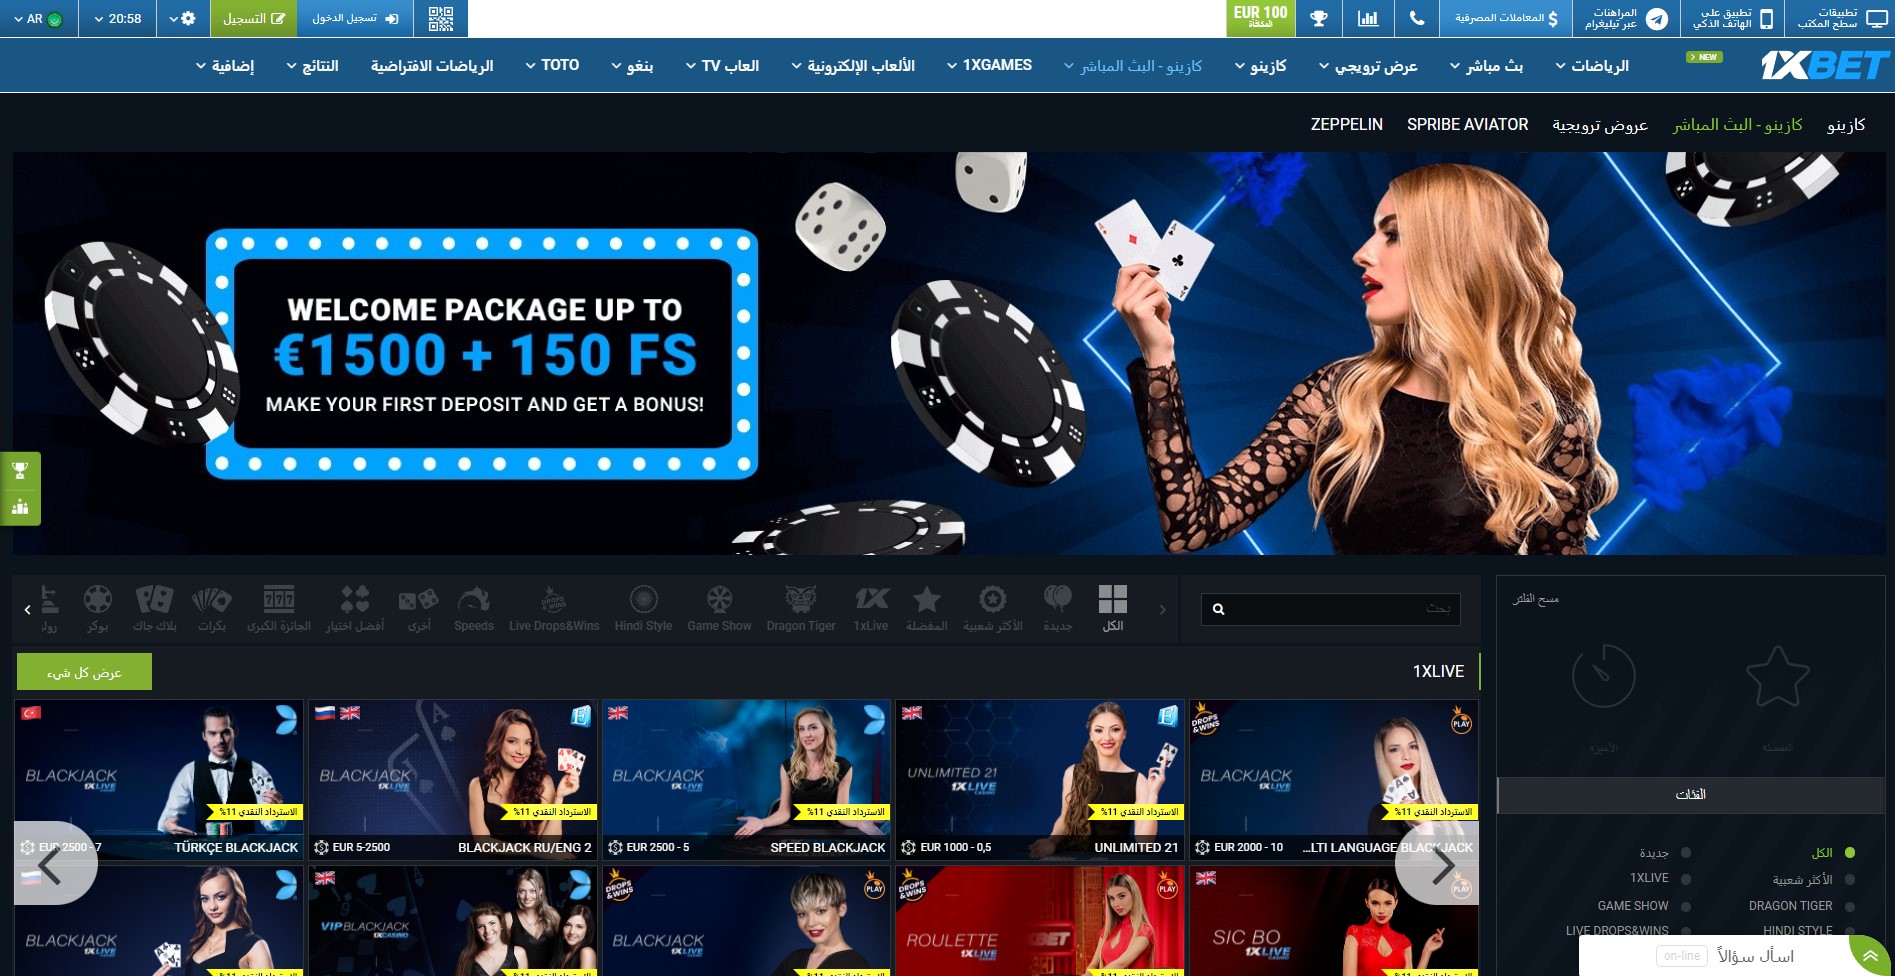 1xbet casino online